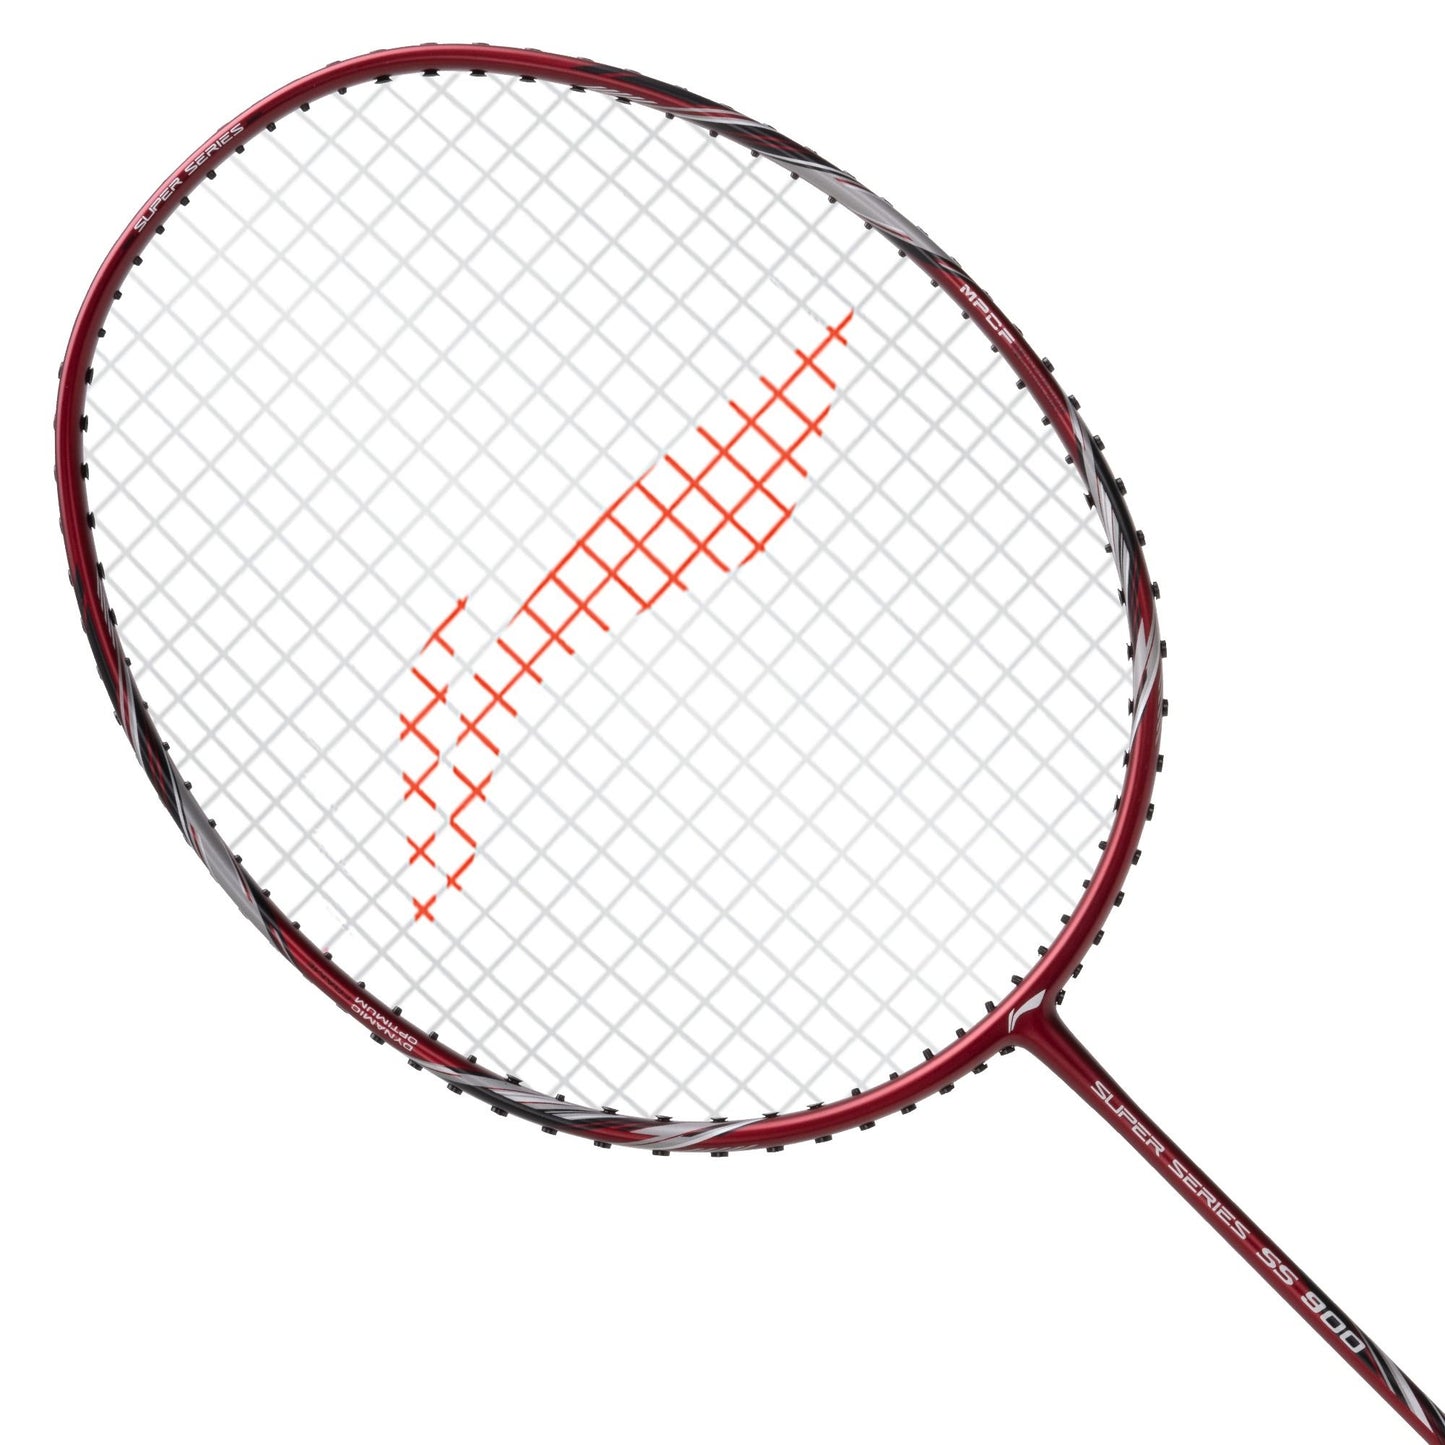 Li-Ning Super Series SS 900 (Red/Grey) Badminton Racket